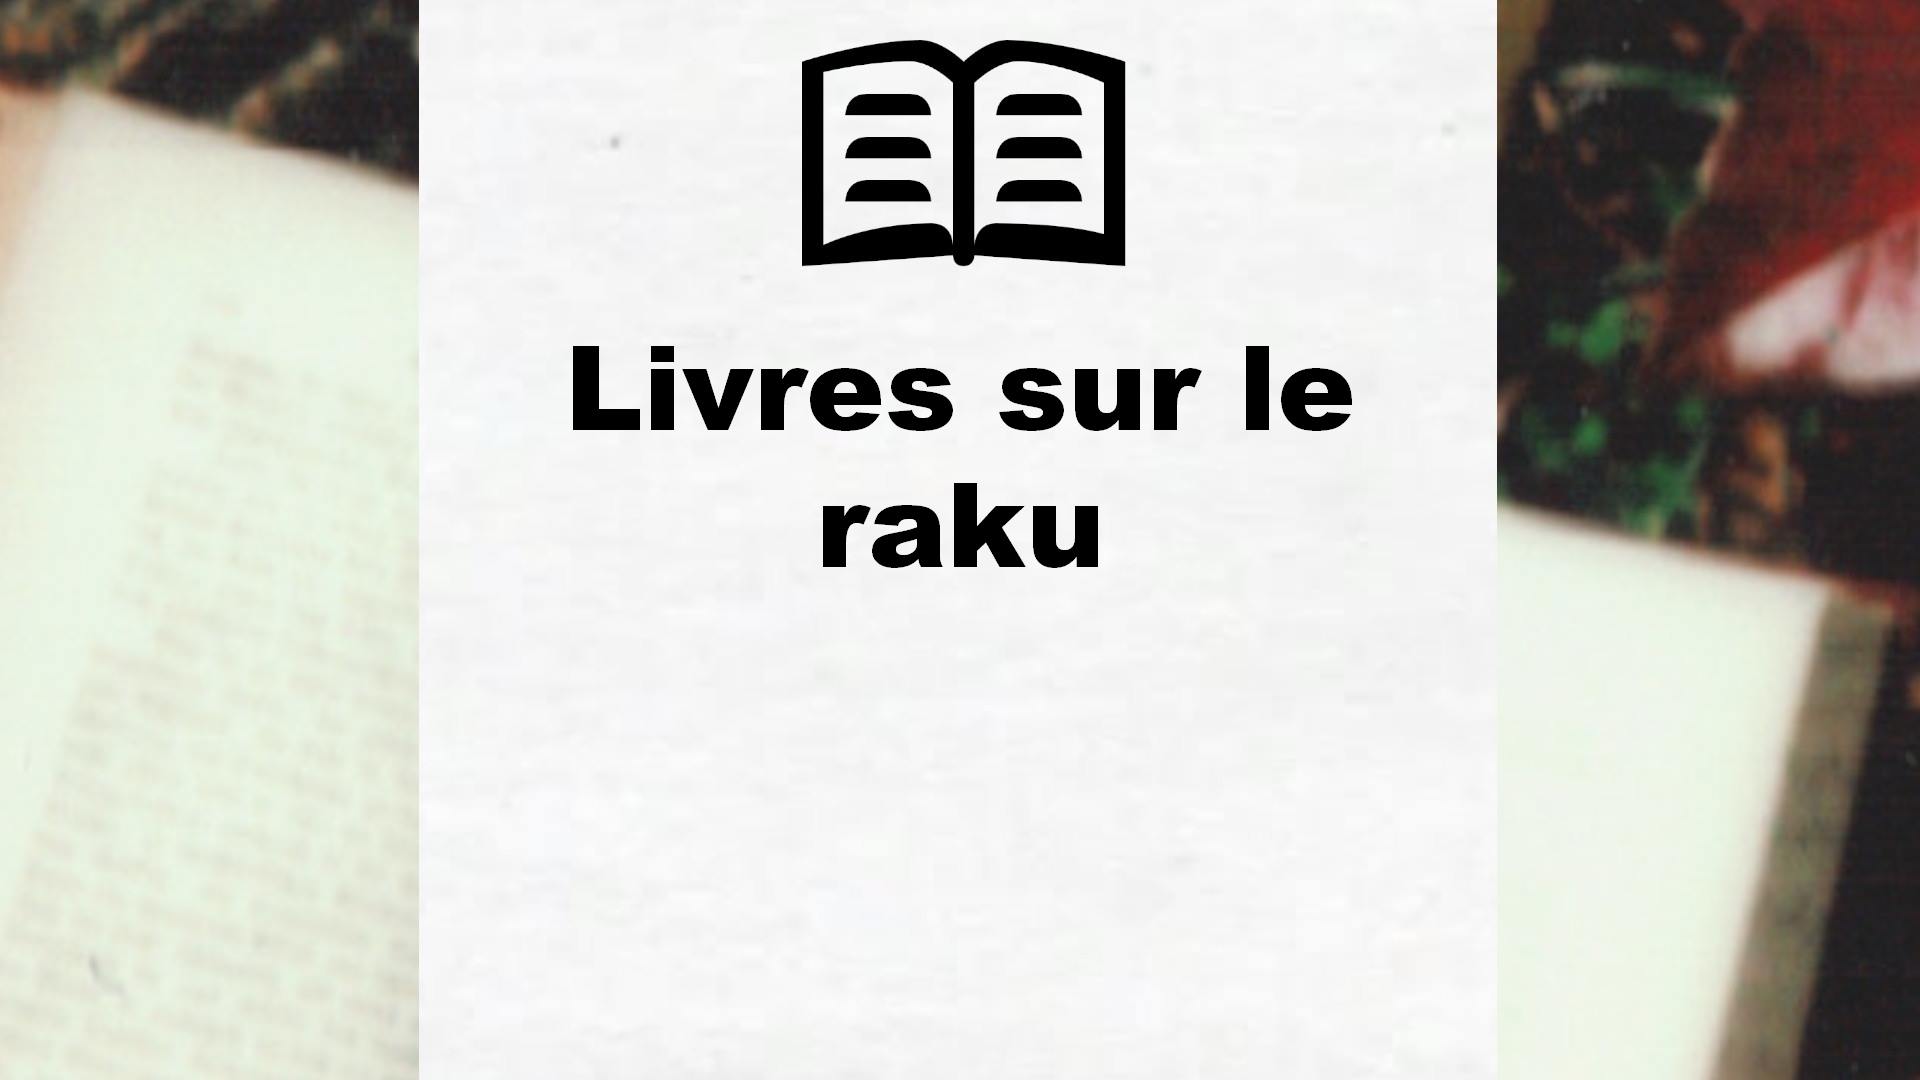 Livres sur le raku